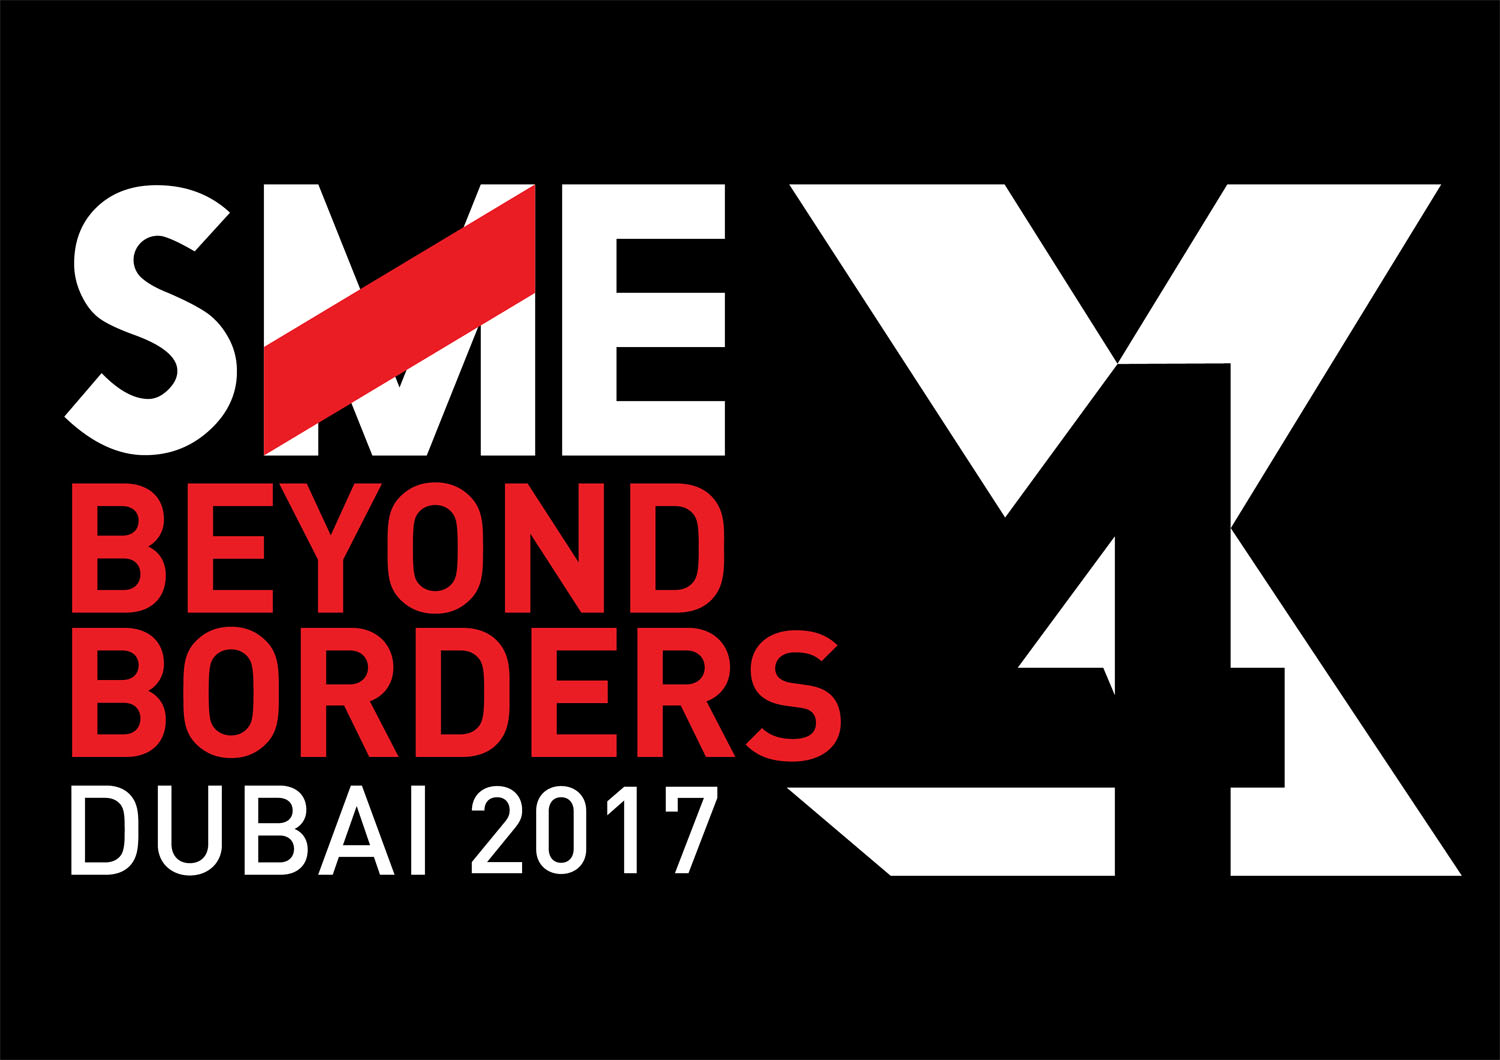 SME-Beyond-Borders-2017-copy.jpg